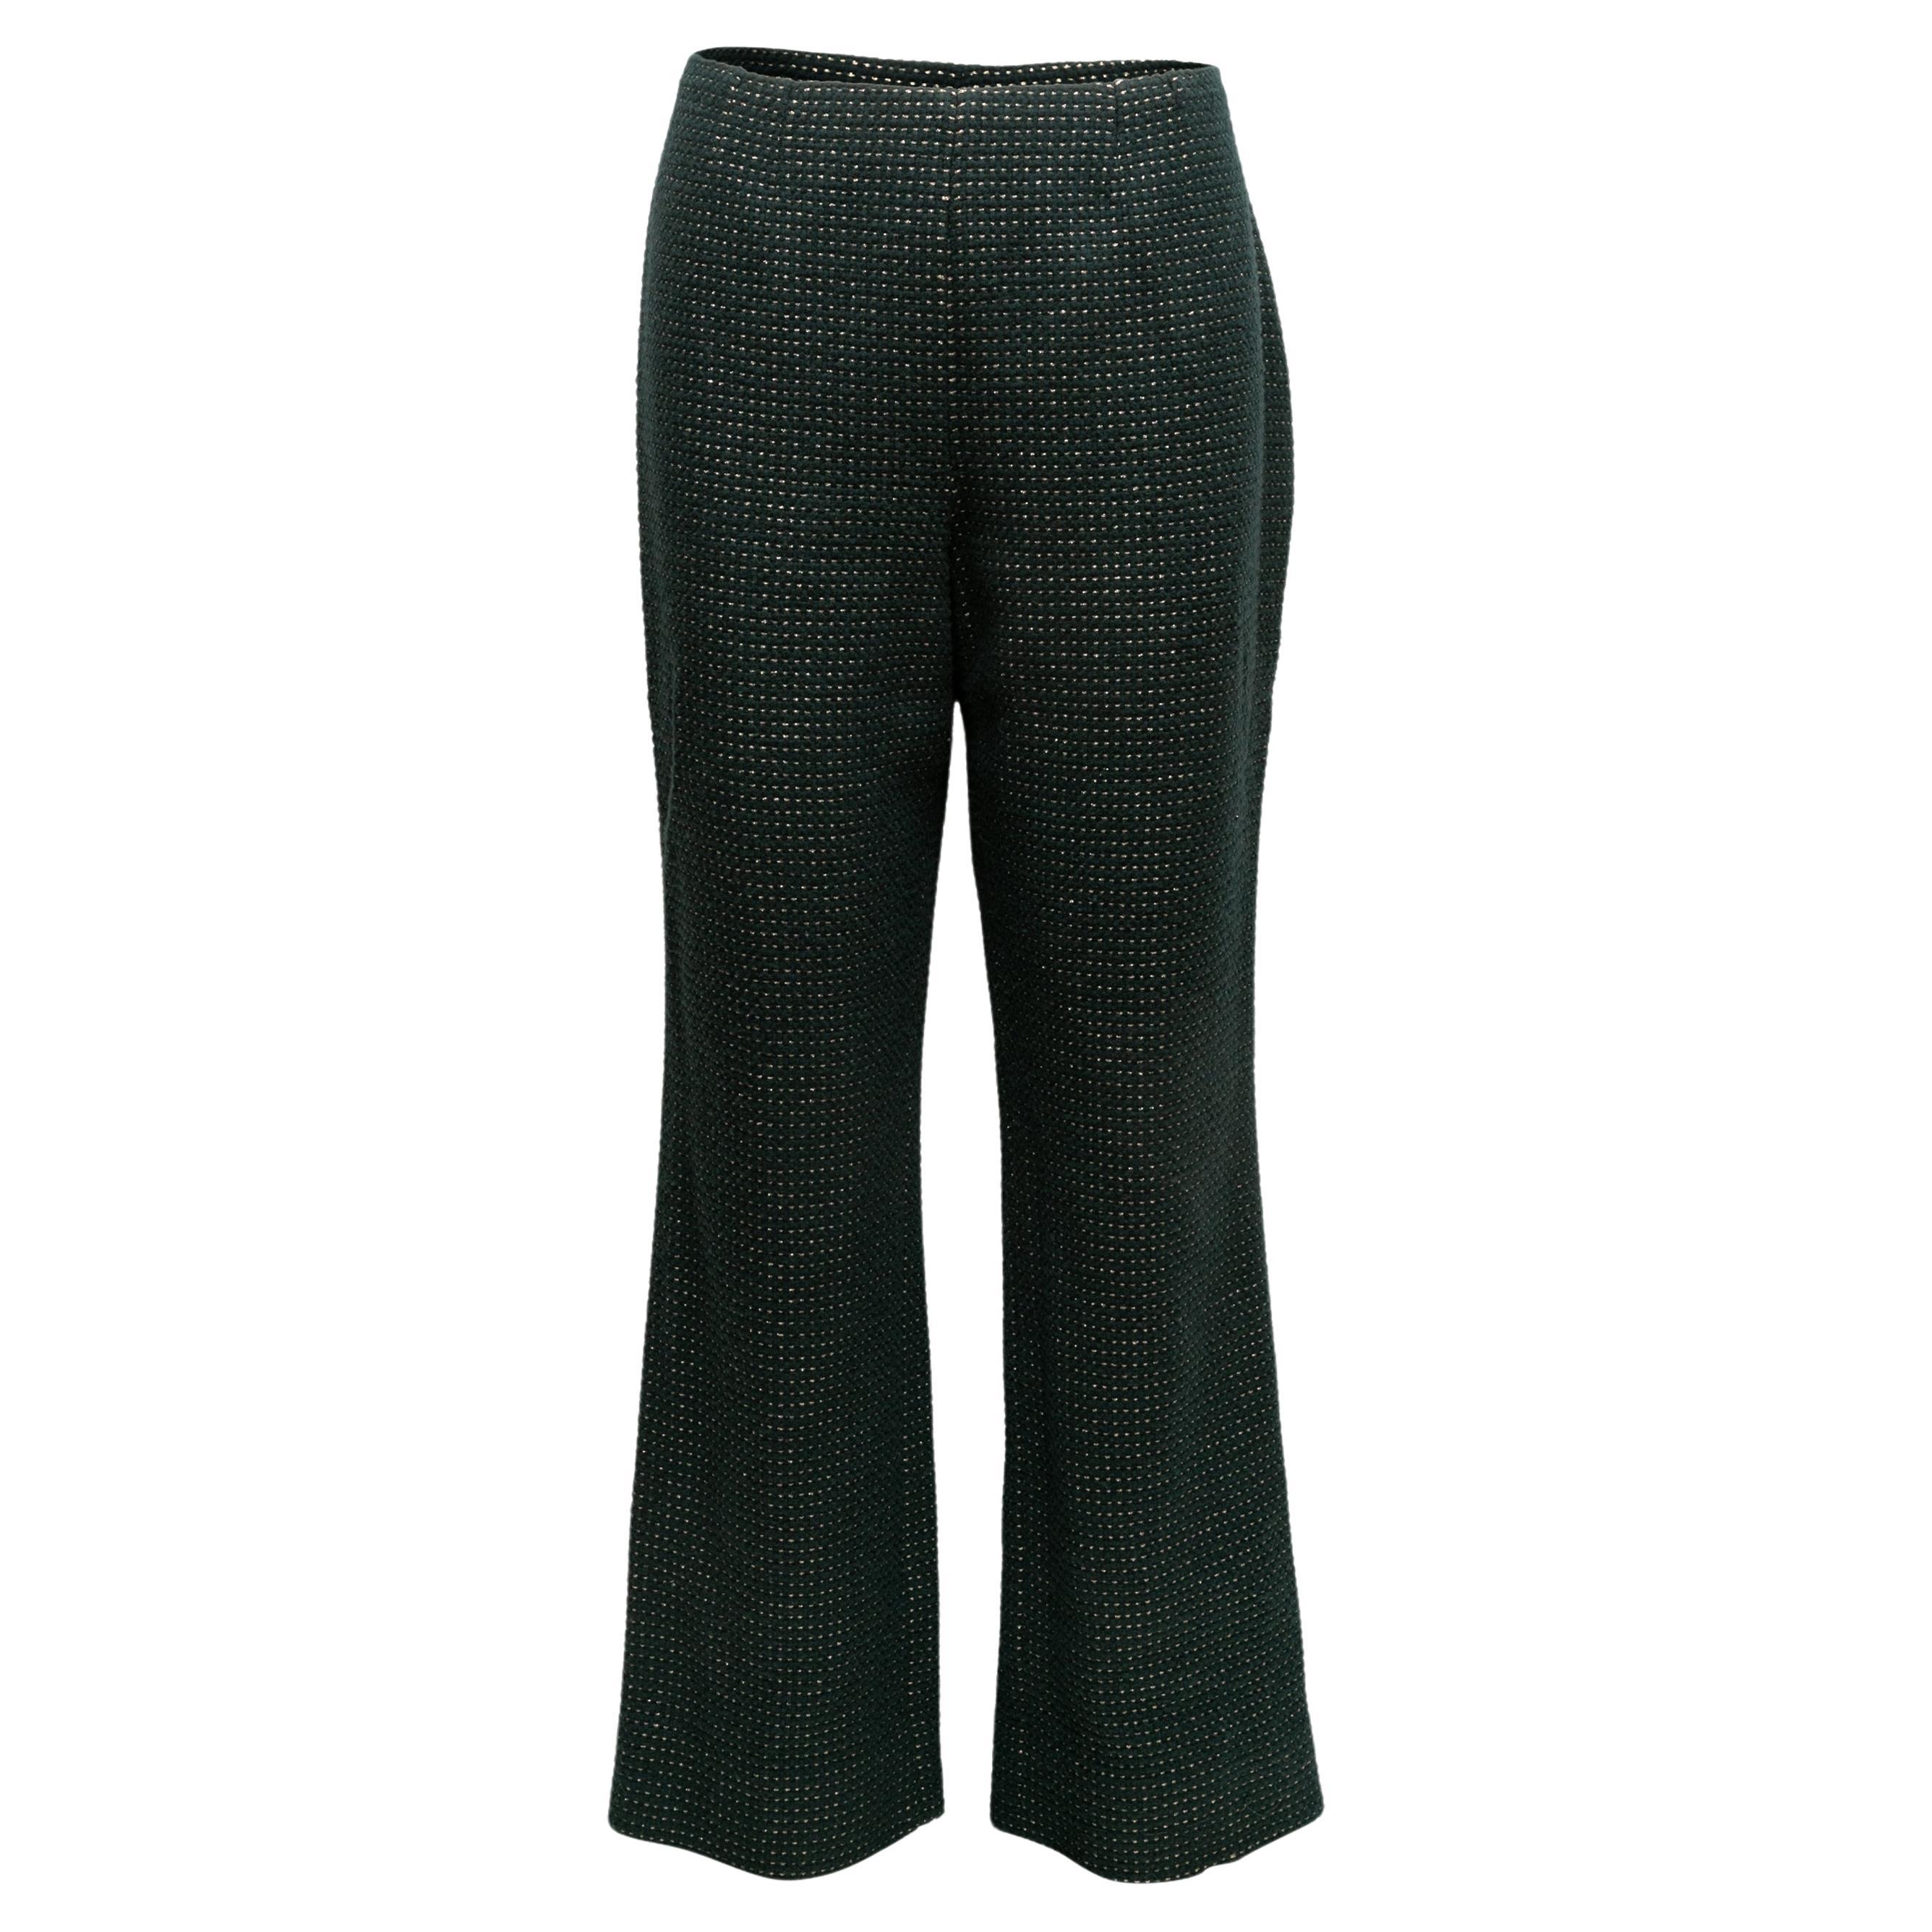 Vintage Dark Green & Gold Chanel Fall/Winter 2000 Wool Trousers Size FR 44